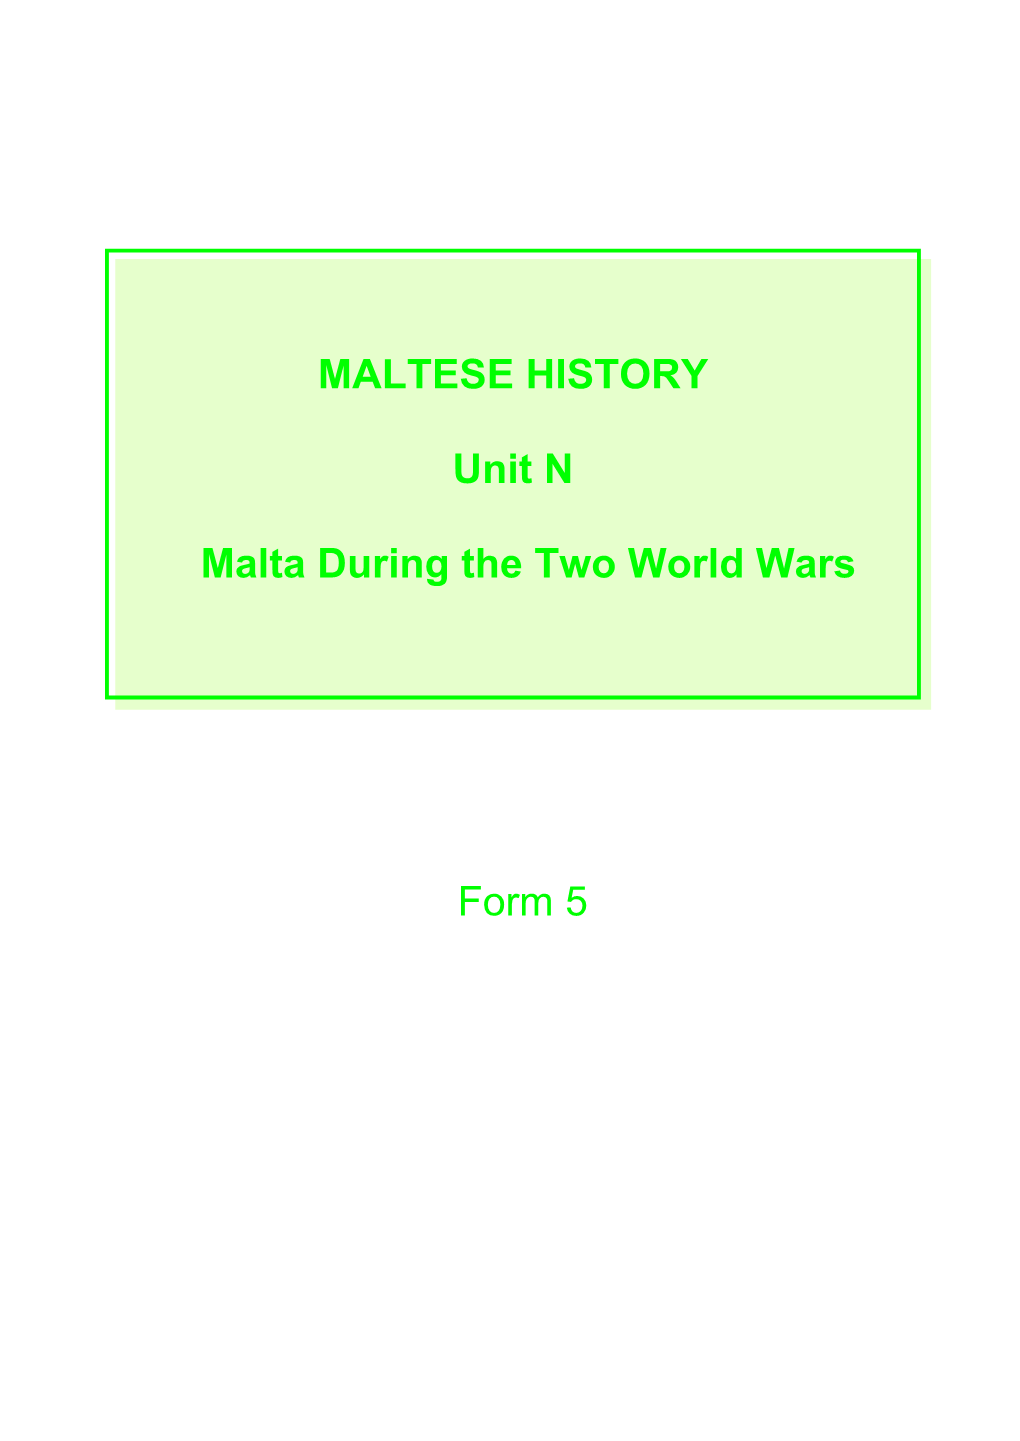 Malta During the Second World War (1940-1943) (1)